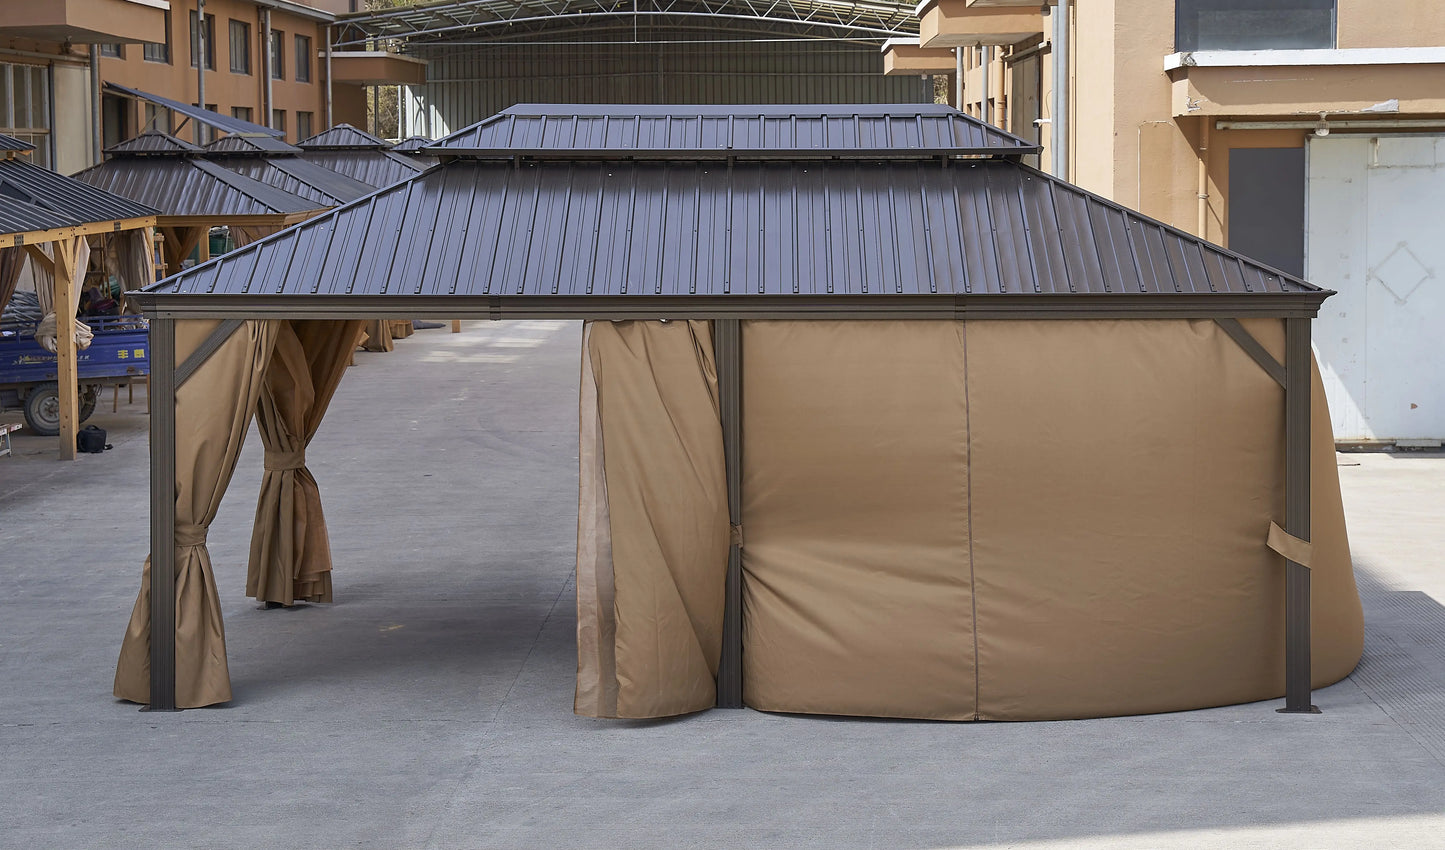 12x20FT Patio Gazebo with Steel Canopy Outdoor Permanent Hardtop